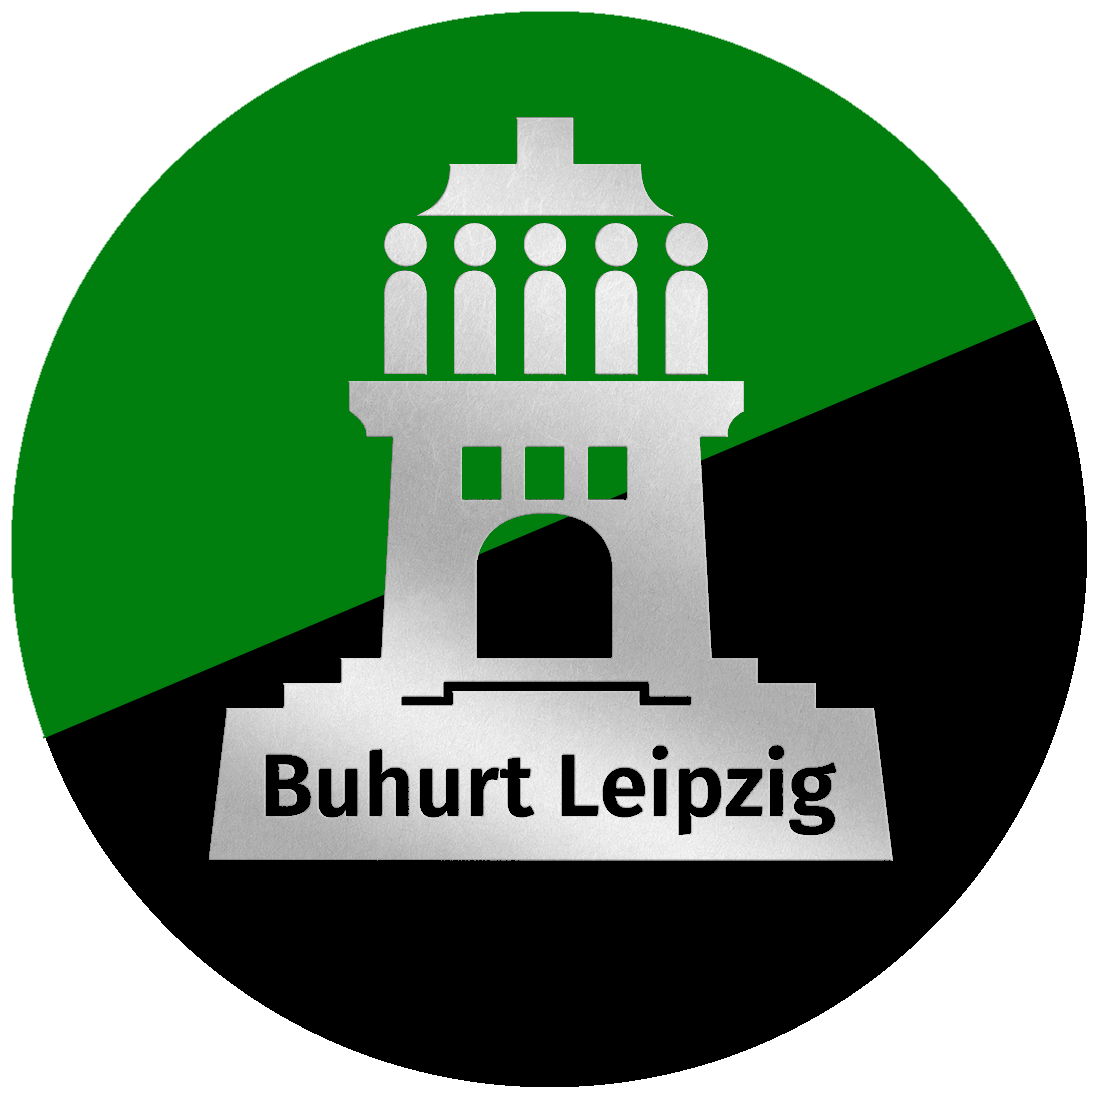 buhurt-leipzig.de logo